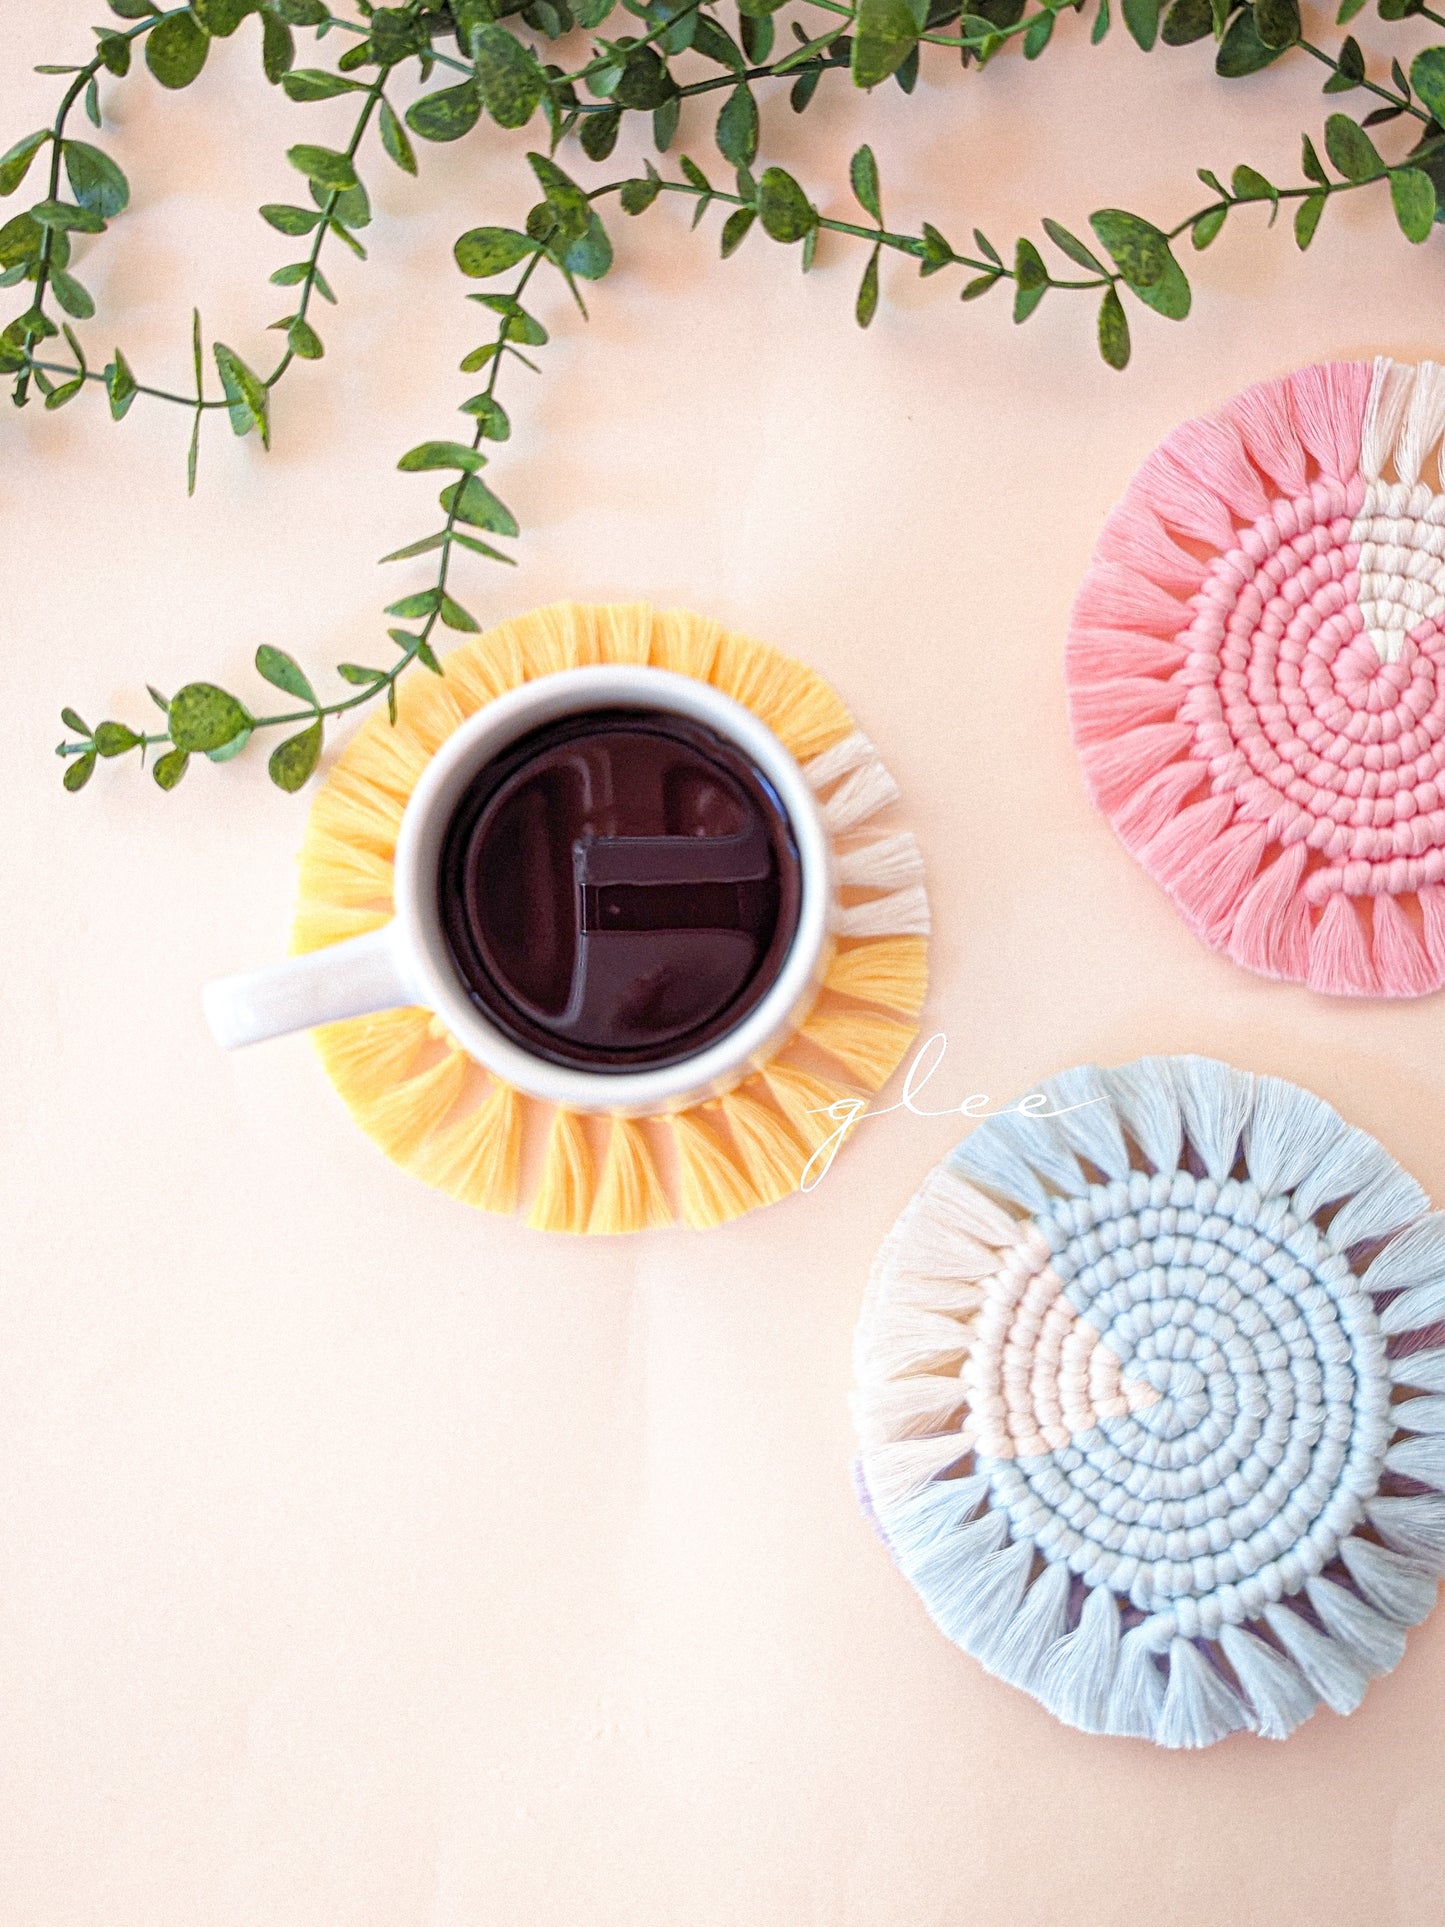 Tea-coffee mug coasters